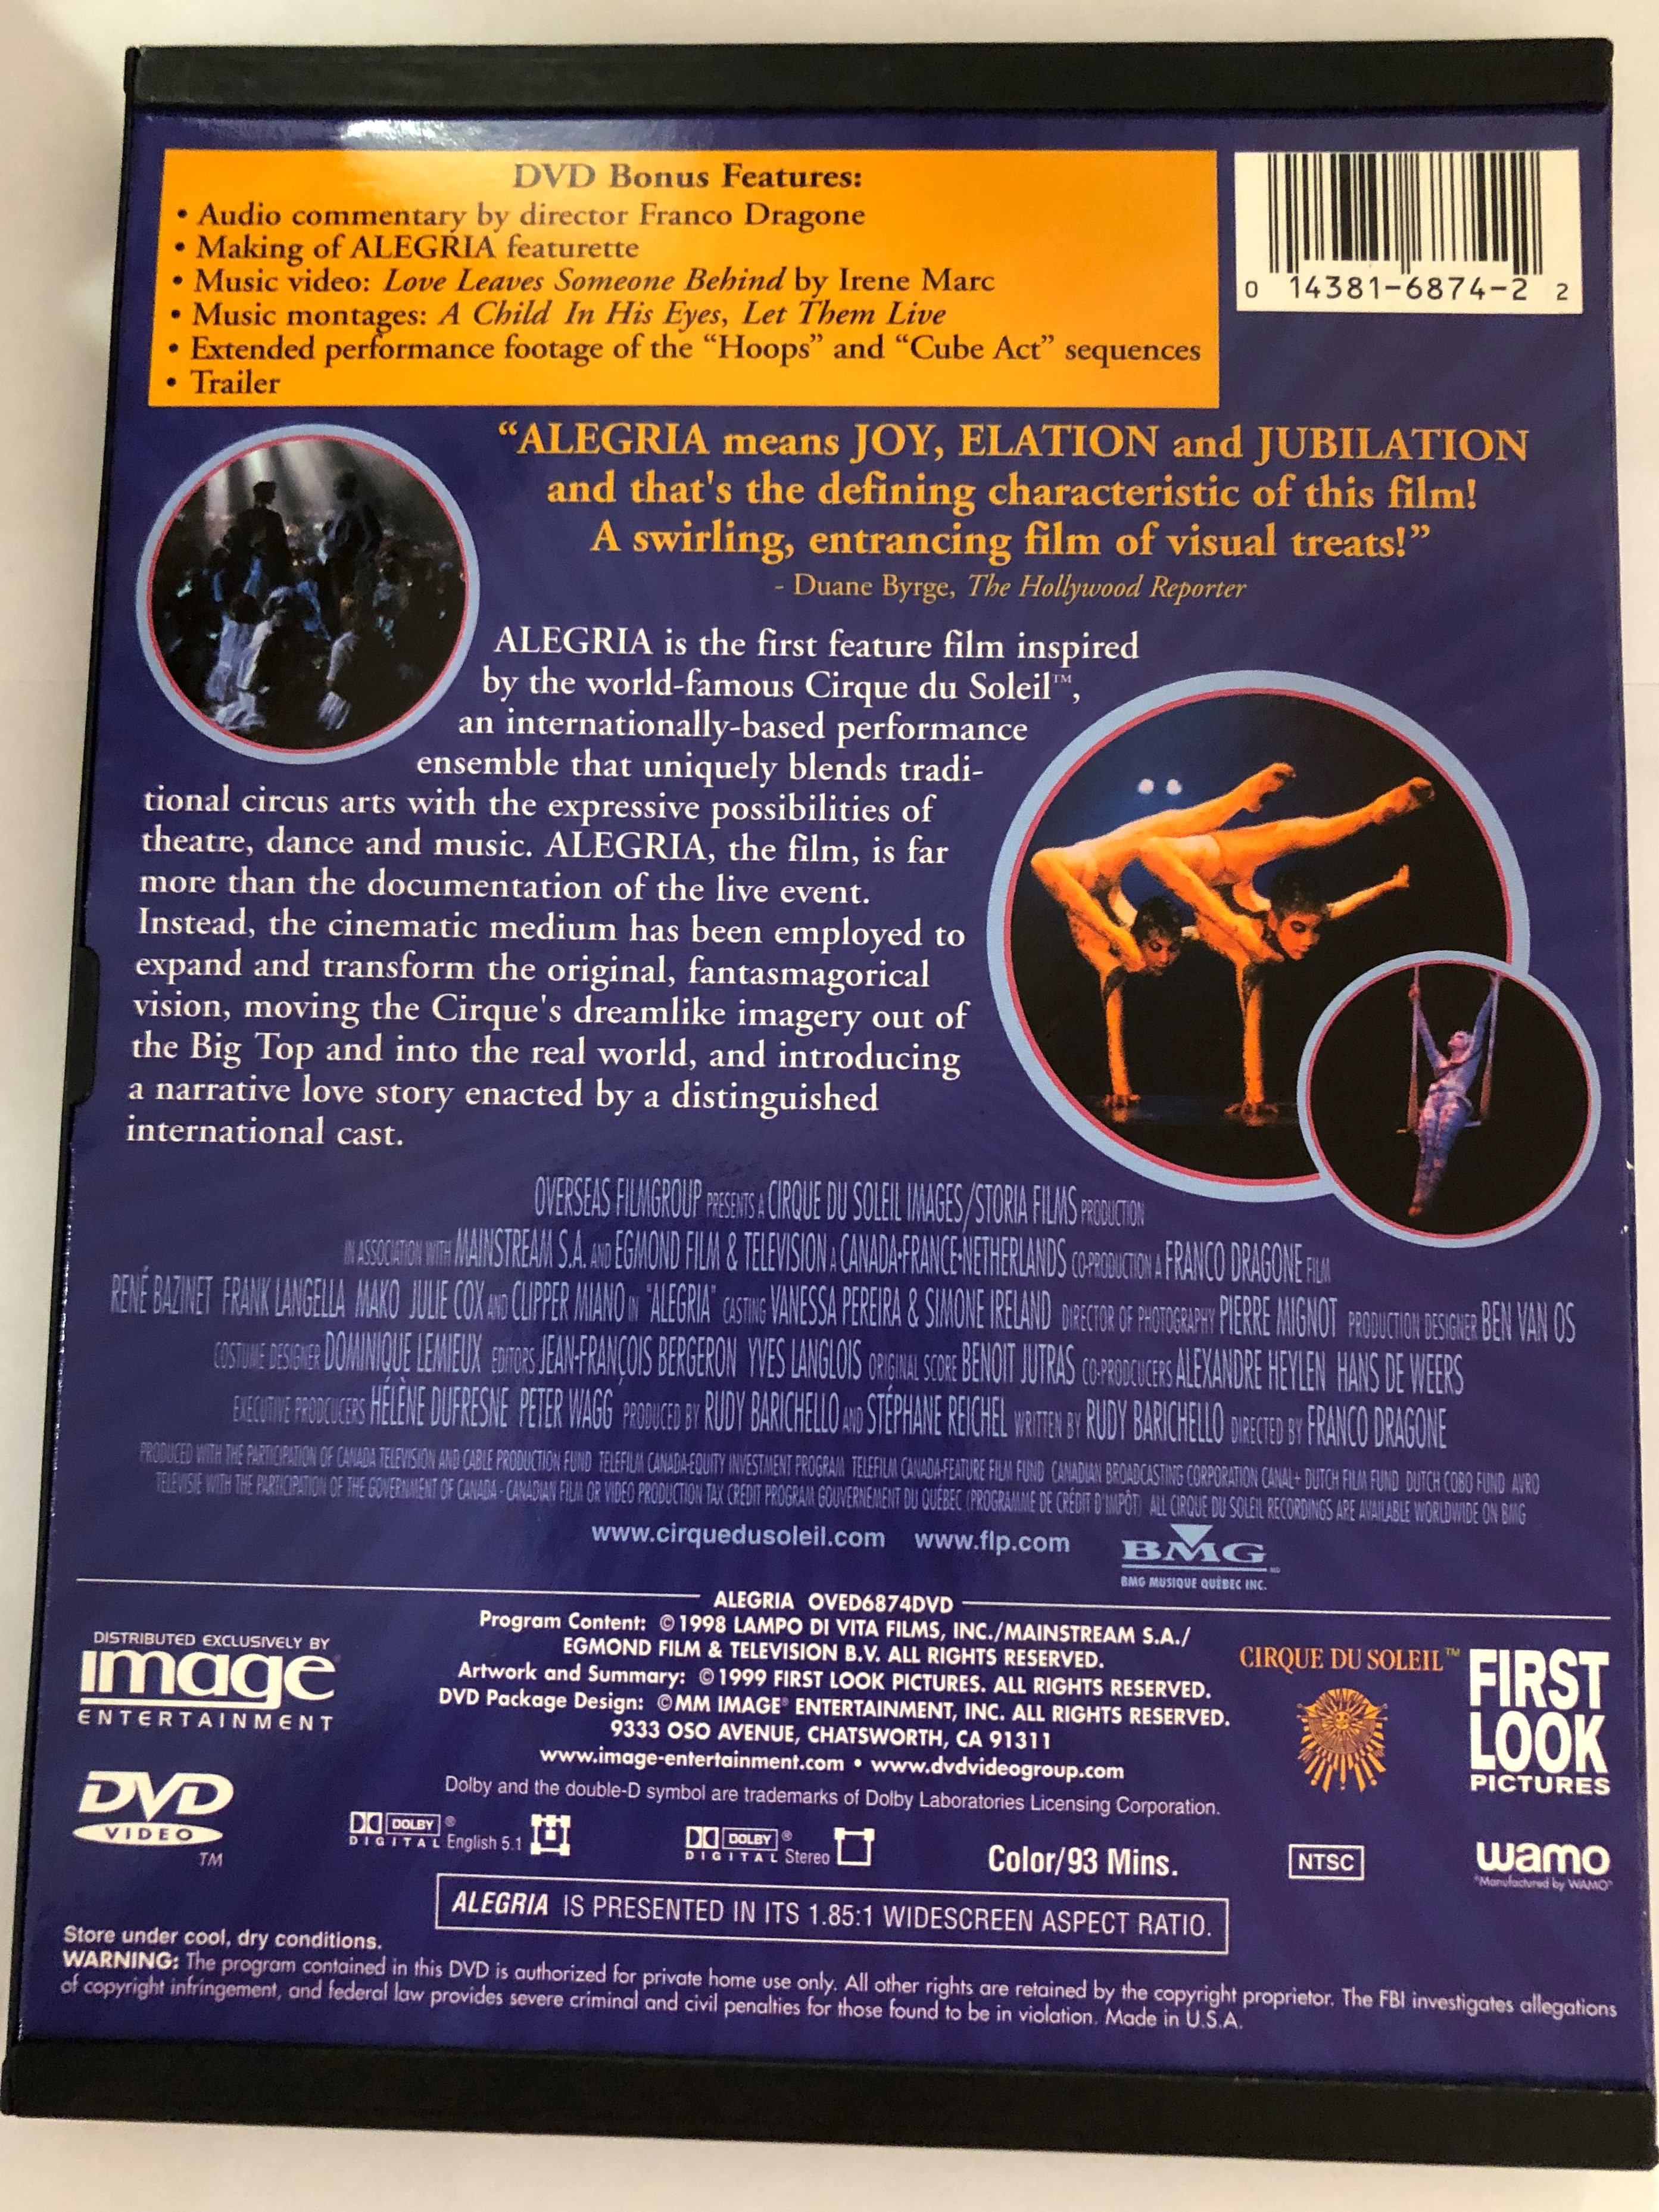 Cirque du Soleil presents - Alegria - An enchanting Fable DVD 1998 /  Directed by y Franco Dragone / Starring: Frank Langella, Mako, Julie Cox,  René Bazinet, Whoopi Goldberg - bibleinmylanguage